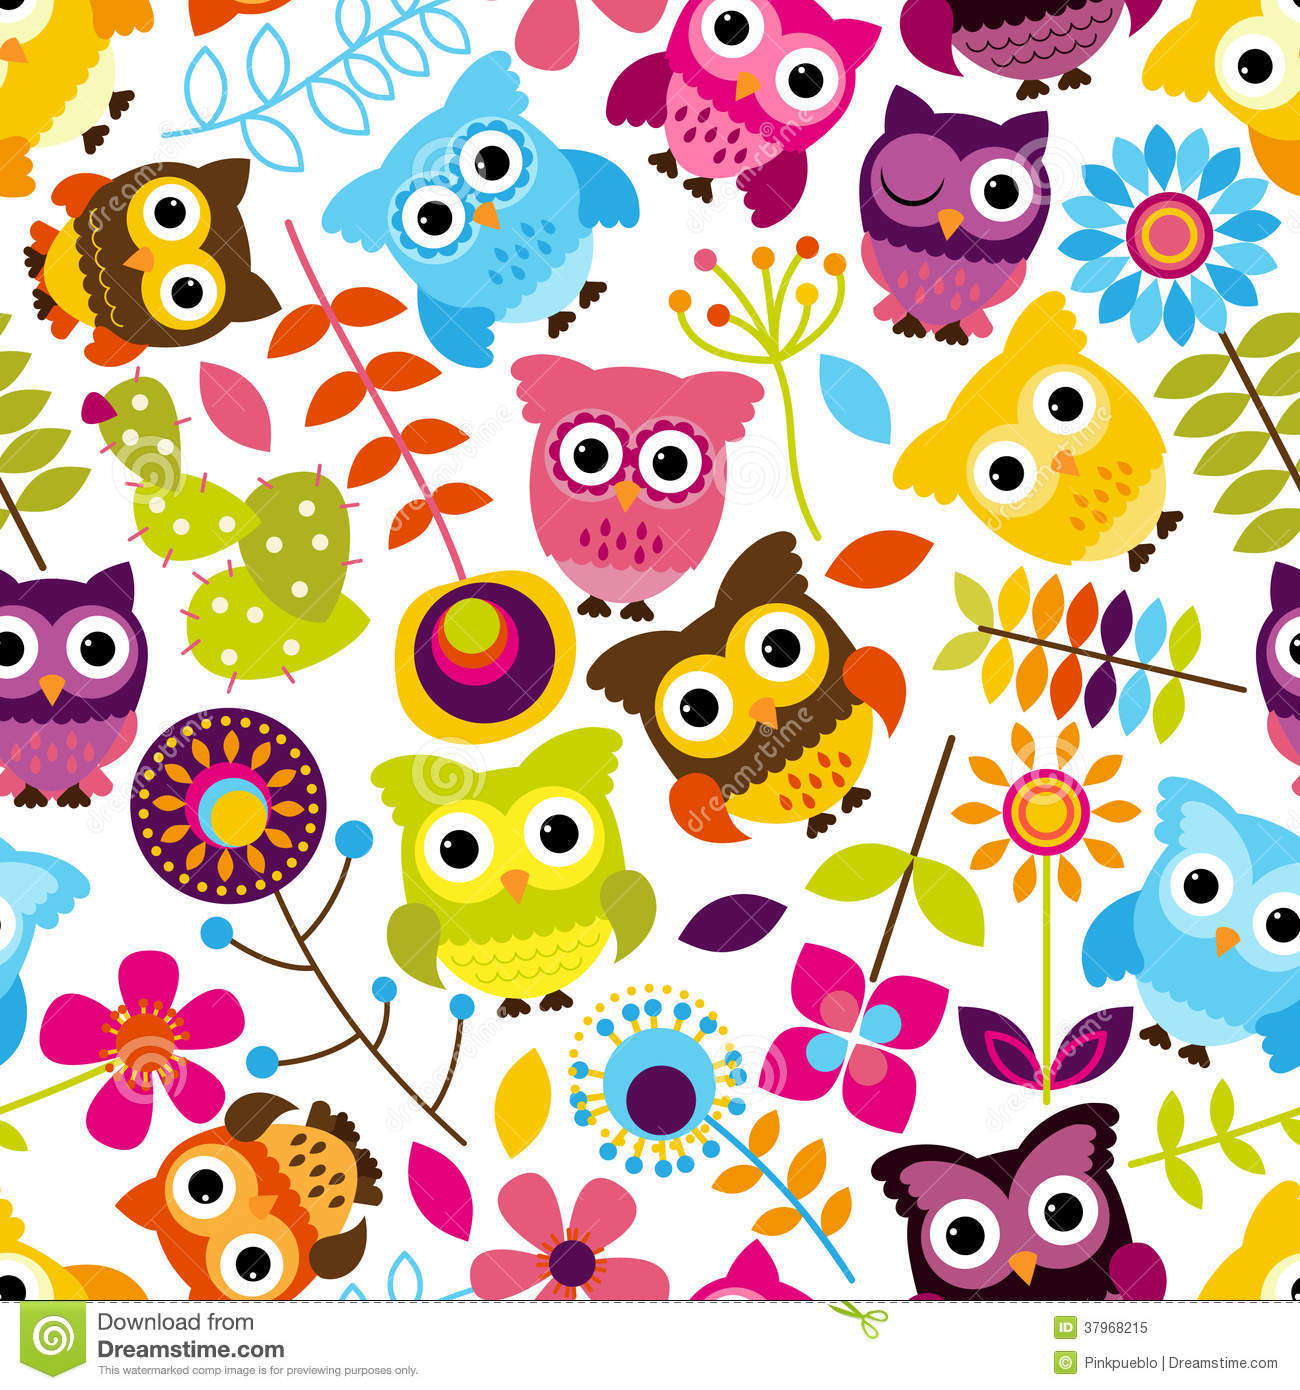  49 Cartoon  Owl  Desktop Wallpaper  on WallpaperSafari